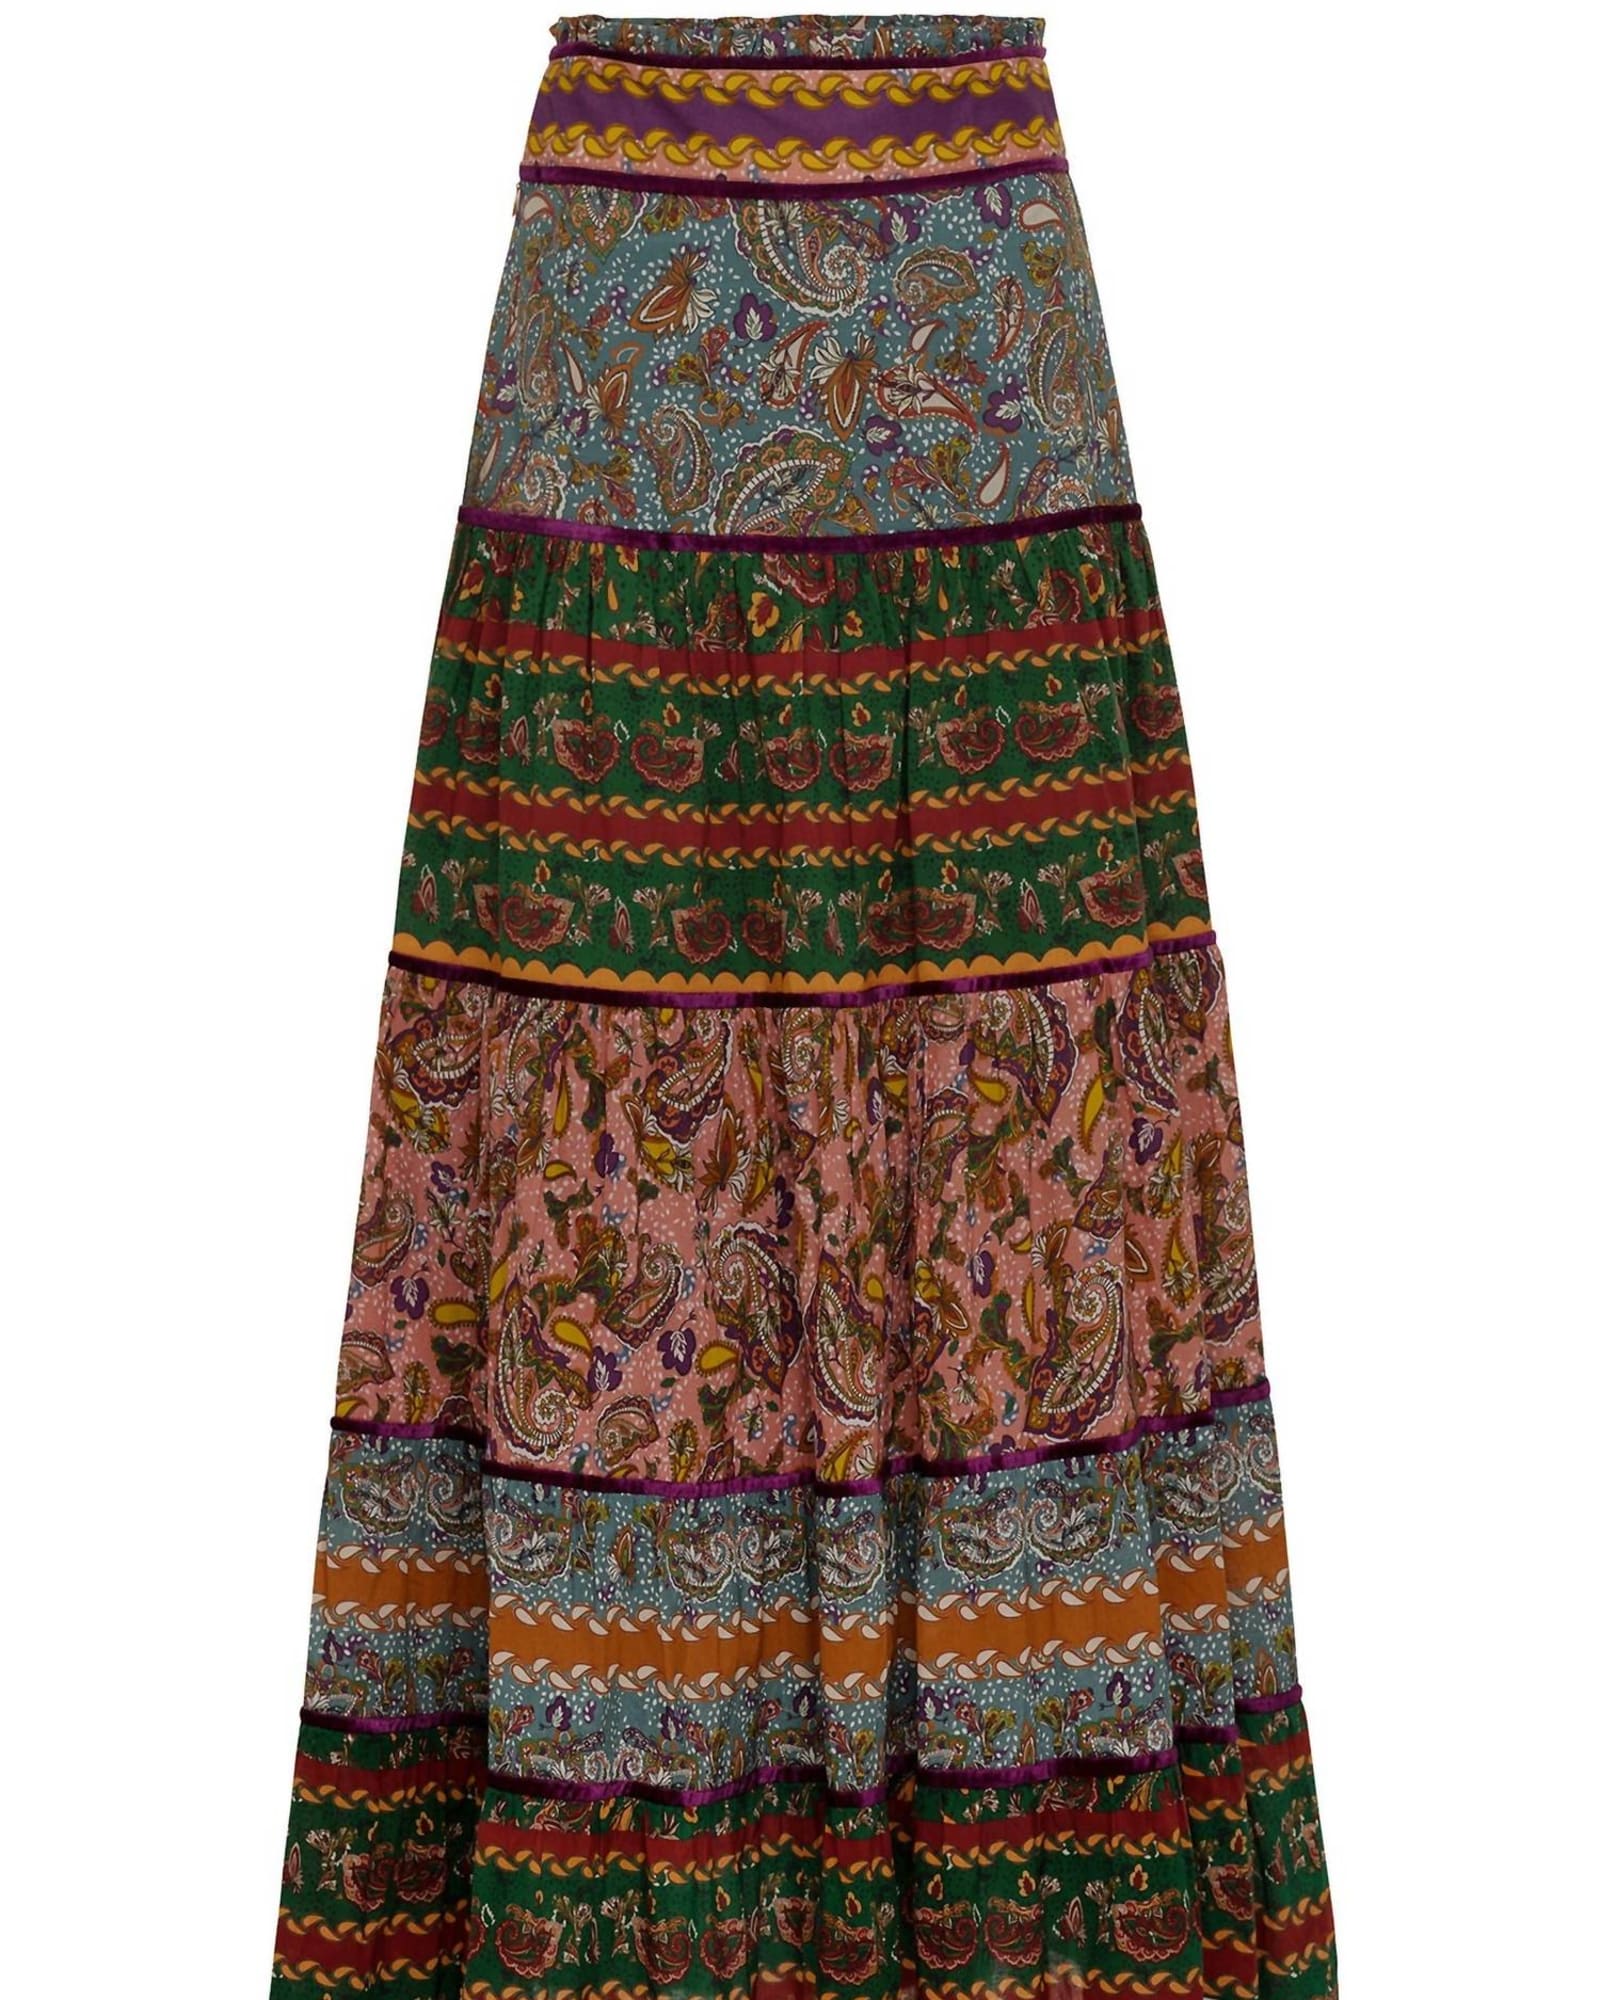 Catalina Skirt in Paisley Multi | Paisley Multi